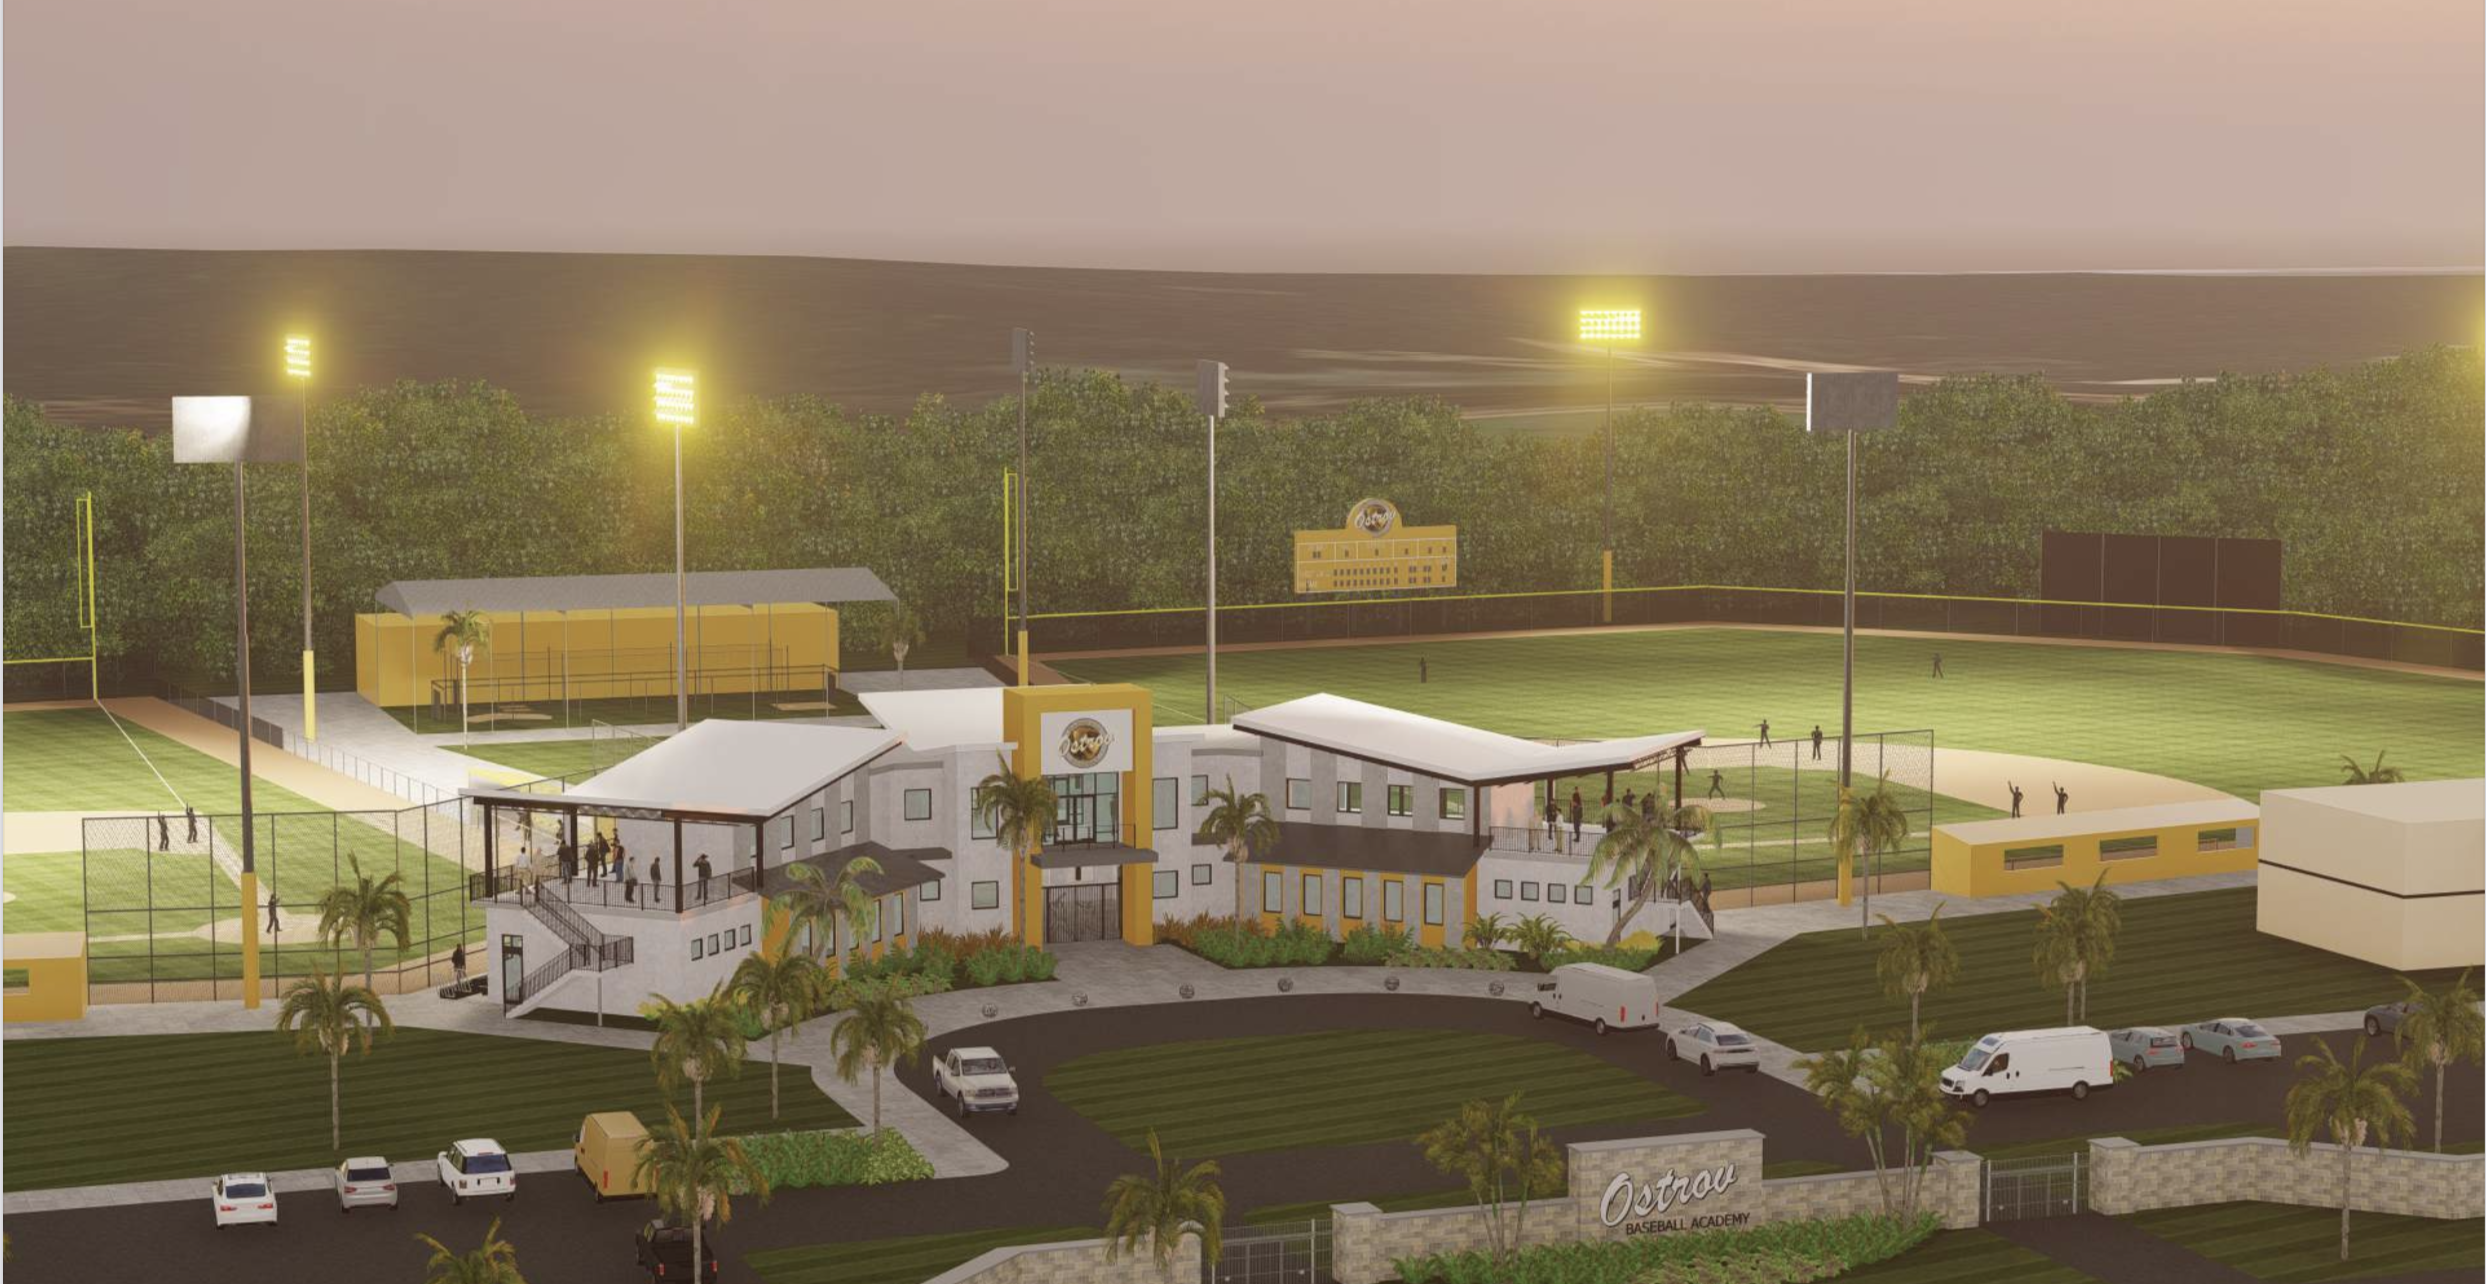 Ostrov Baseball Academy Facility Dominican Republic Latin America MLB